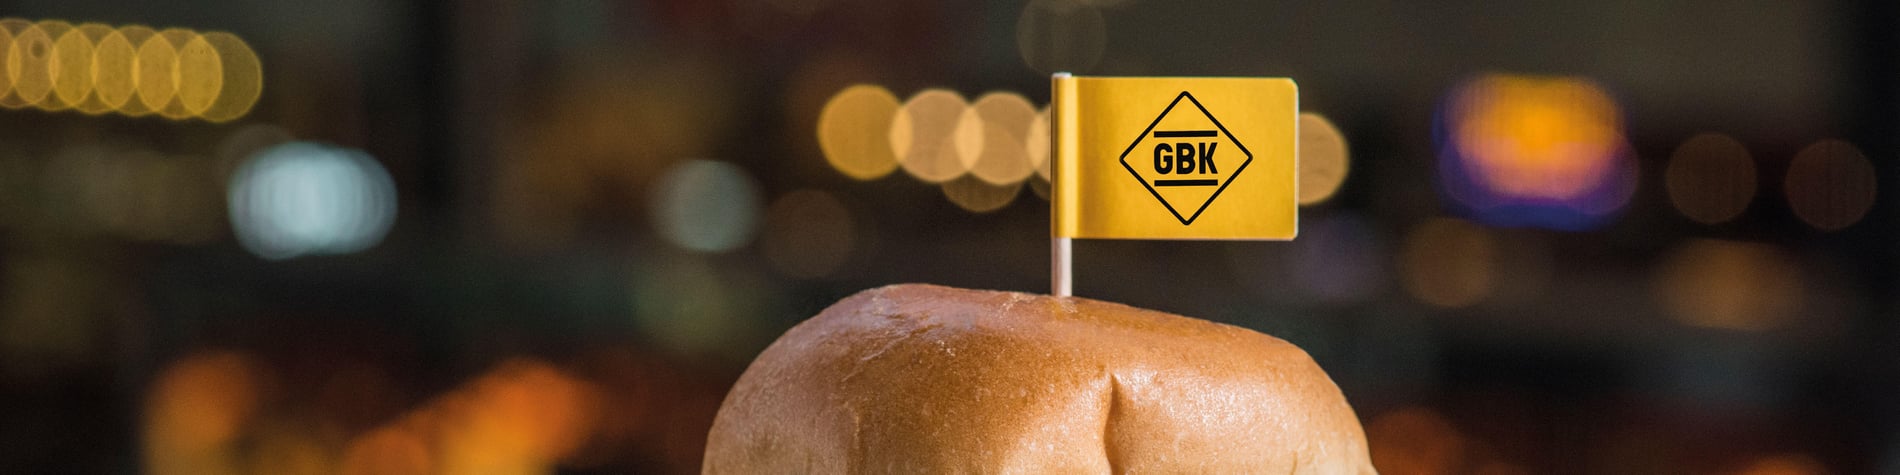 Seadless burger bun with GBK flag in